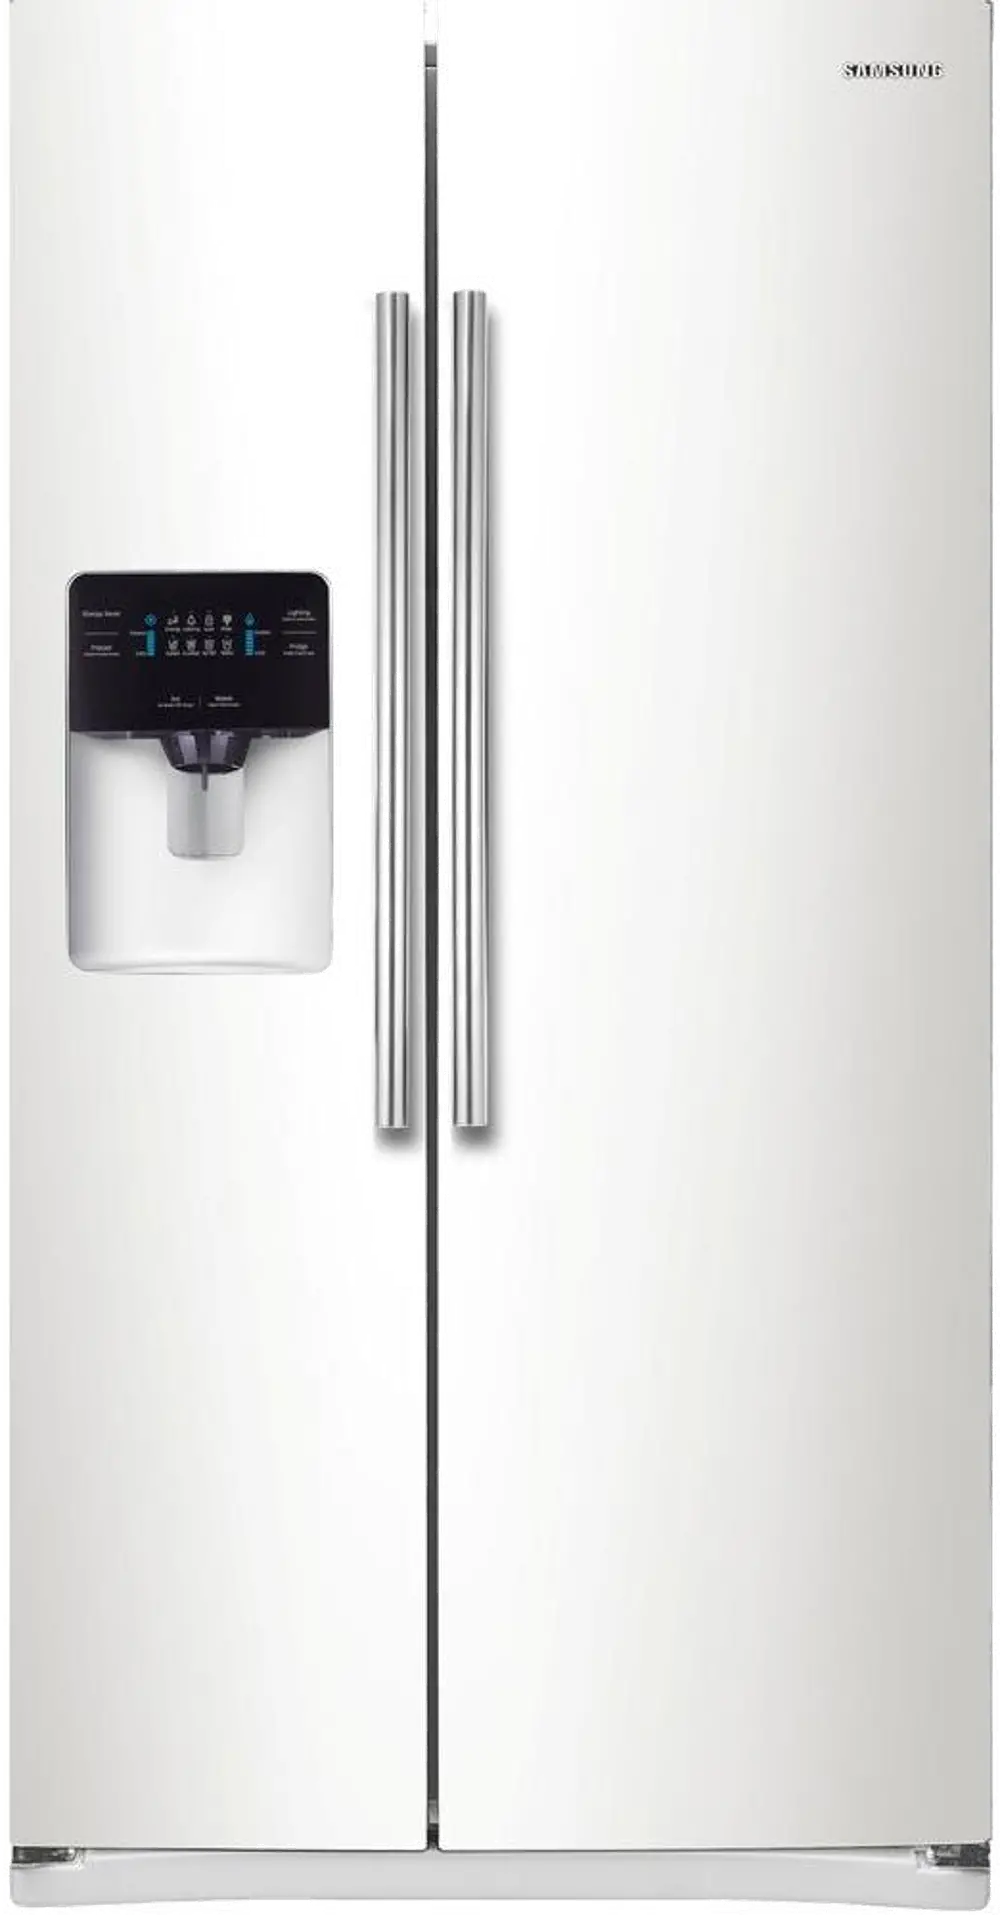 RS25J500DWW Samsung Side-by-Side Refrigerator - 36 Inch White-1